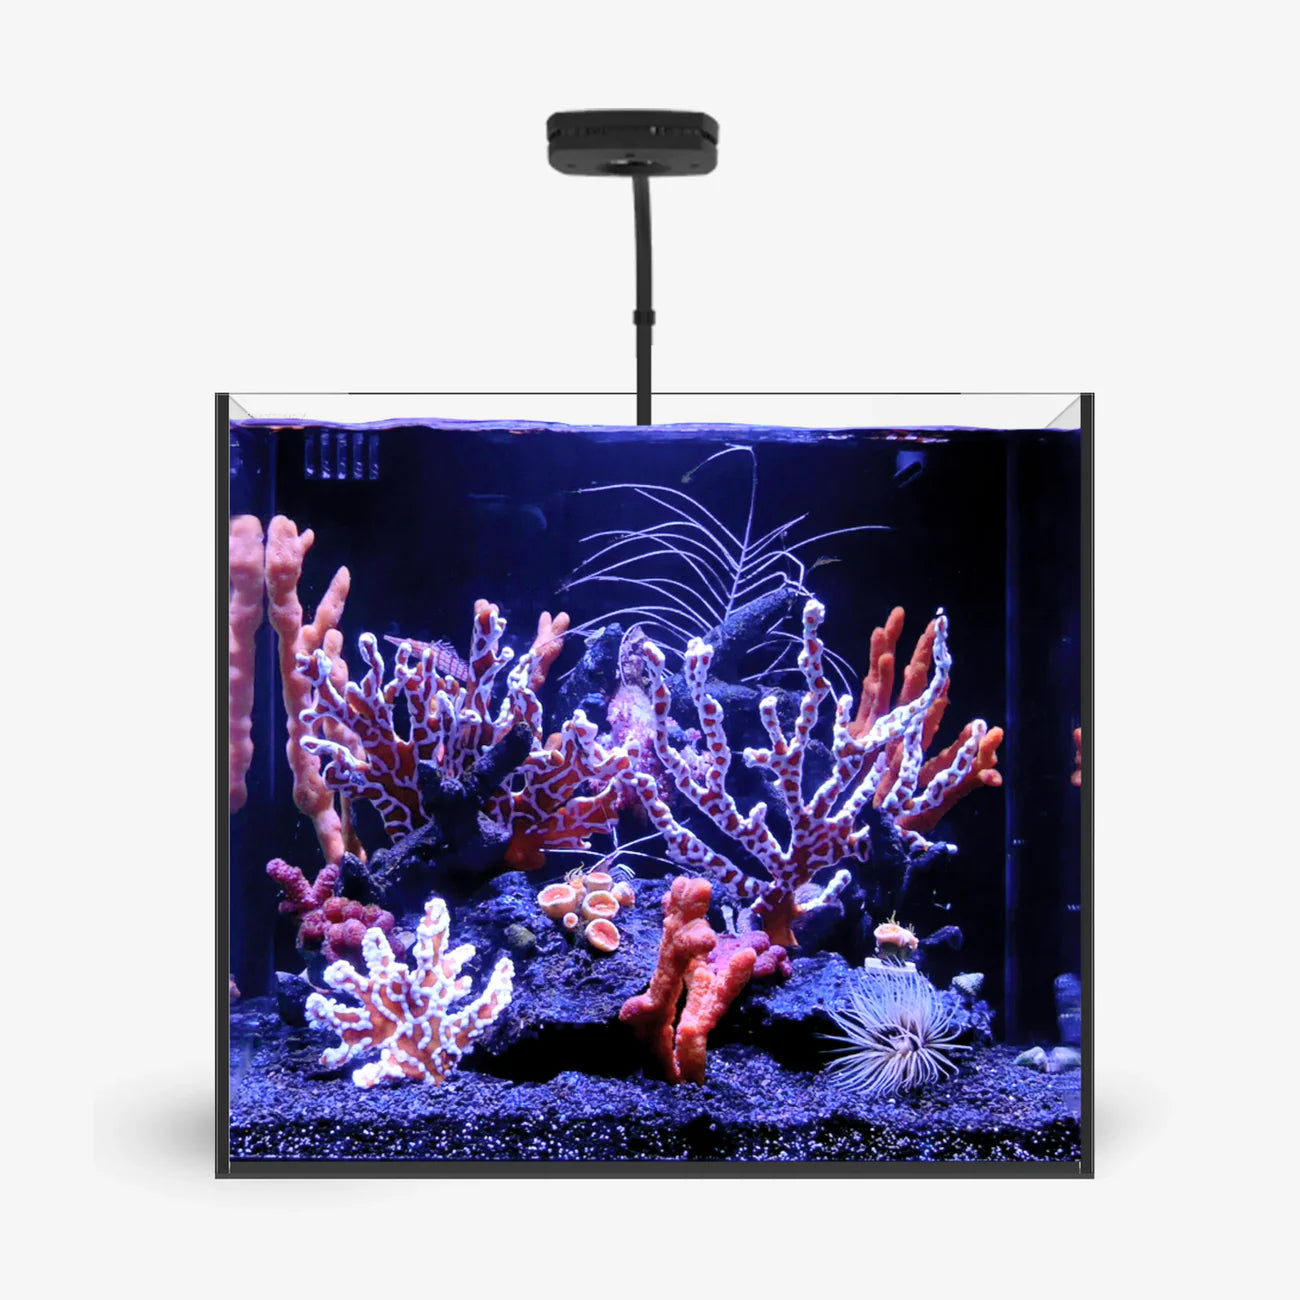 Waterbox AIO 20 Cube Saltwater Aquarium - A1100 - Serenity Provision